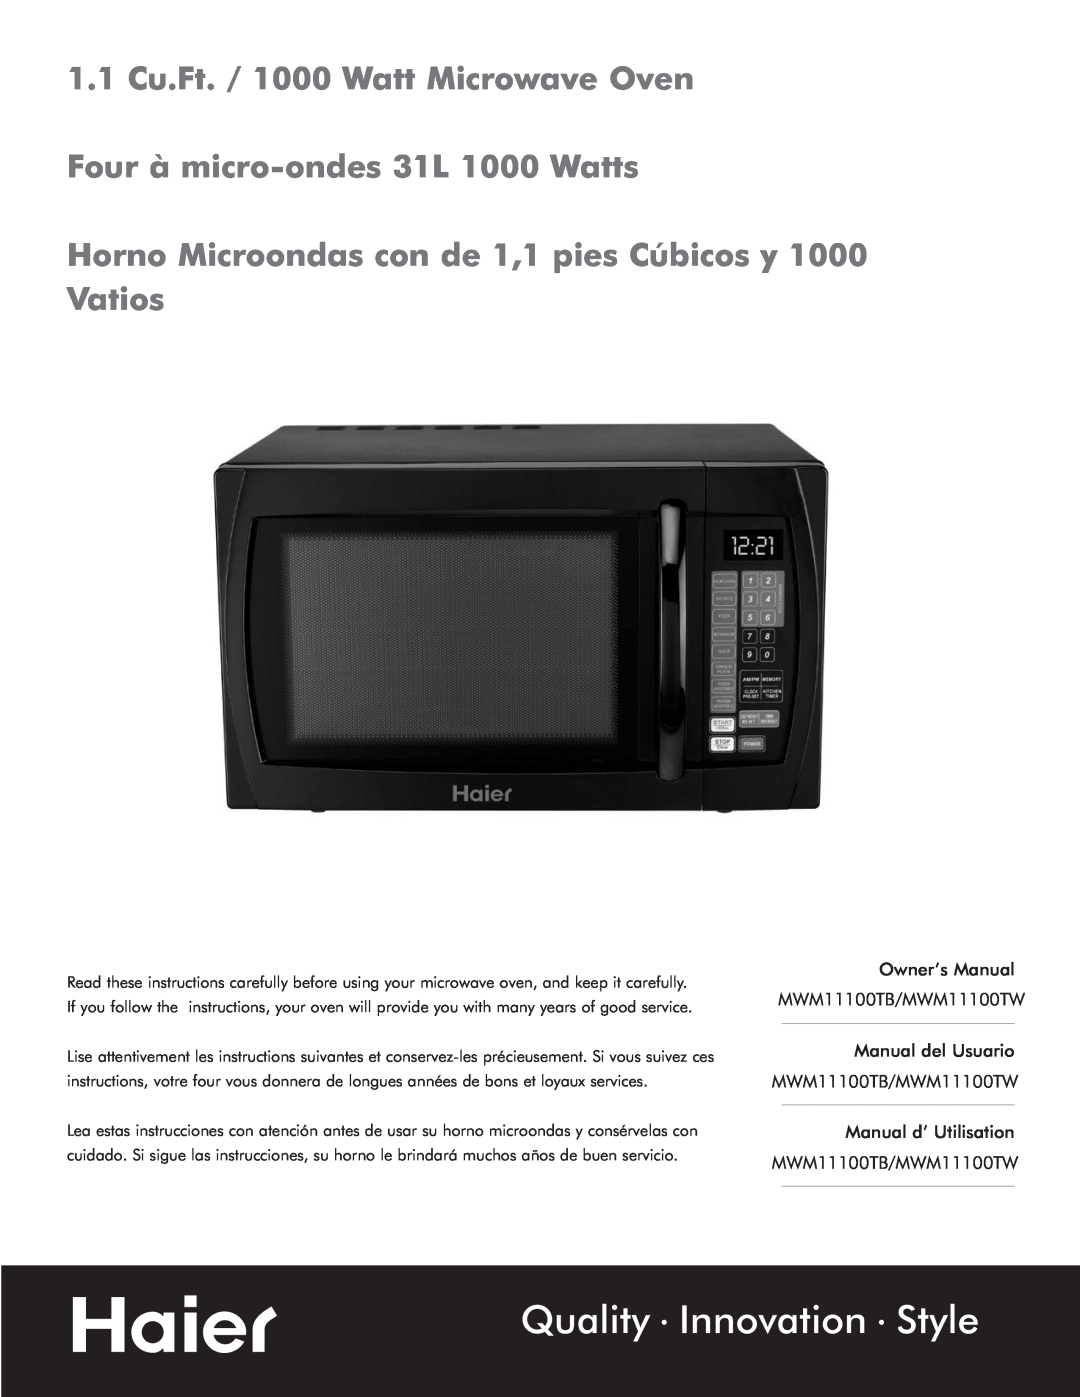 Haier MWM11100TB, MWM11100TW, MWG7036RW owner manual Quality Innovation Style, 1.1 Cu.Ft. / 1000 Watt Microwave Oven 